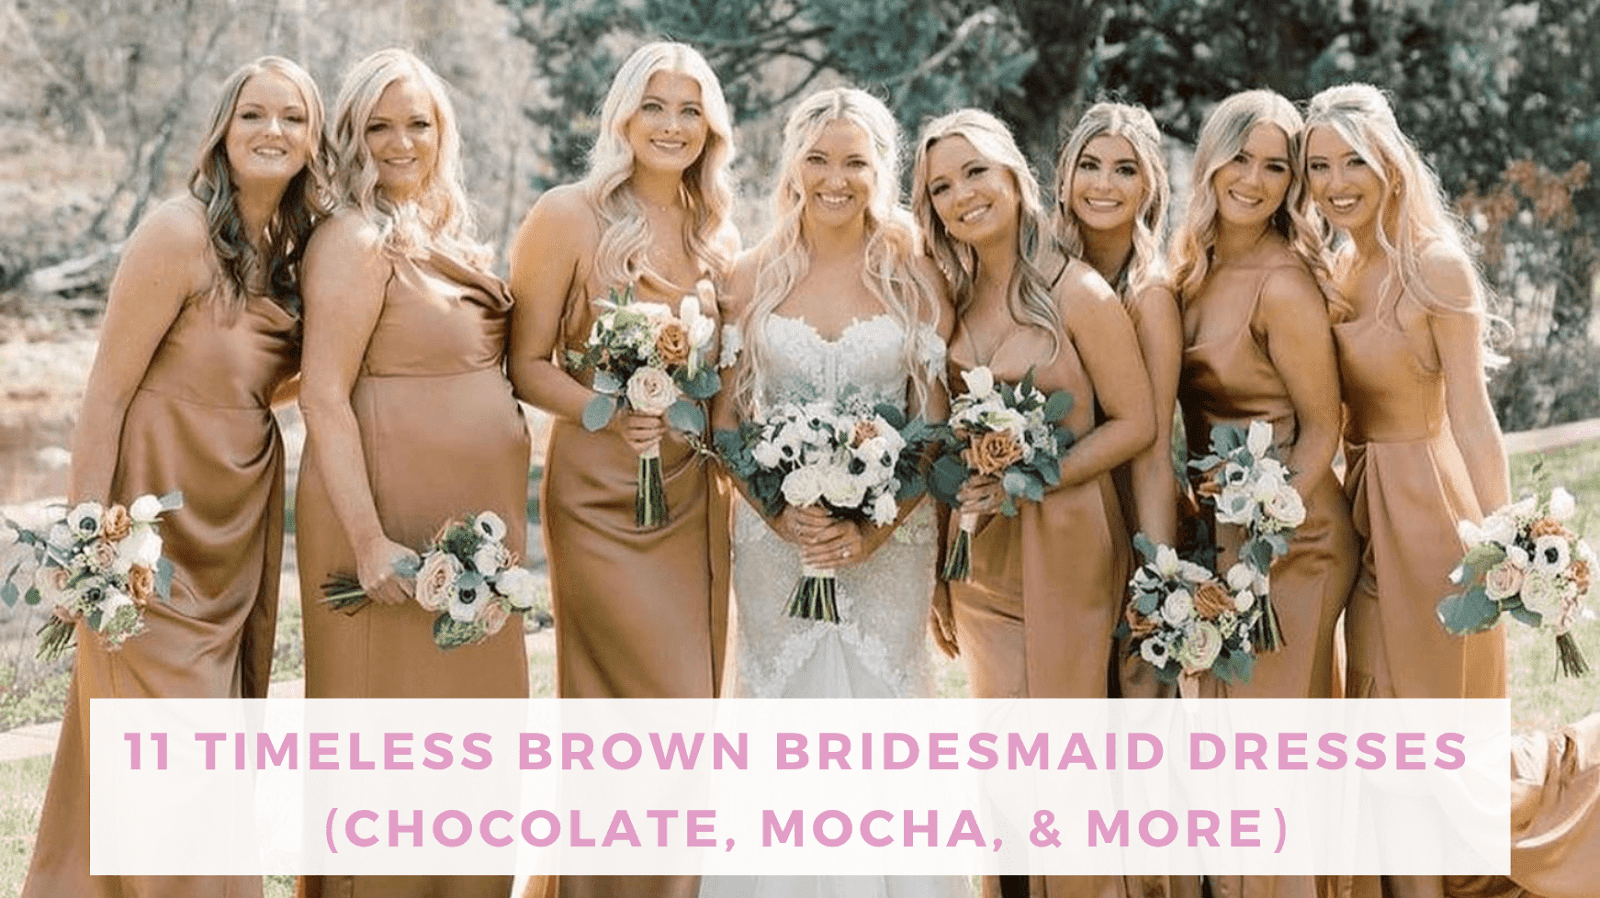 Beach Bridesmaid Dresses from Real Weddings - Destination Wedding